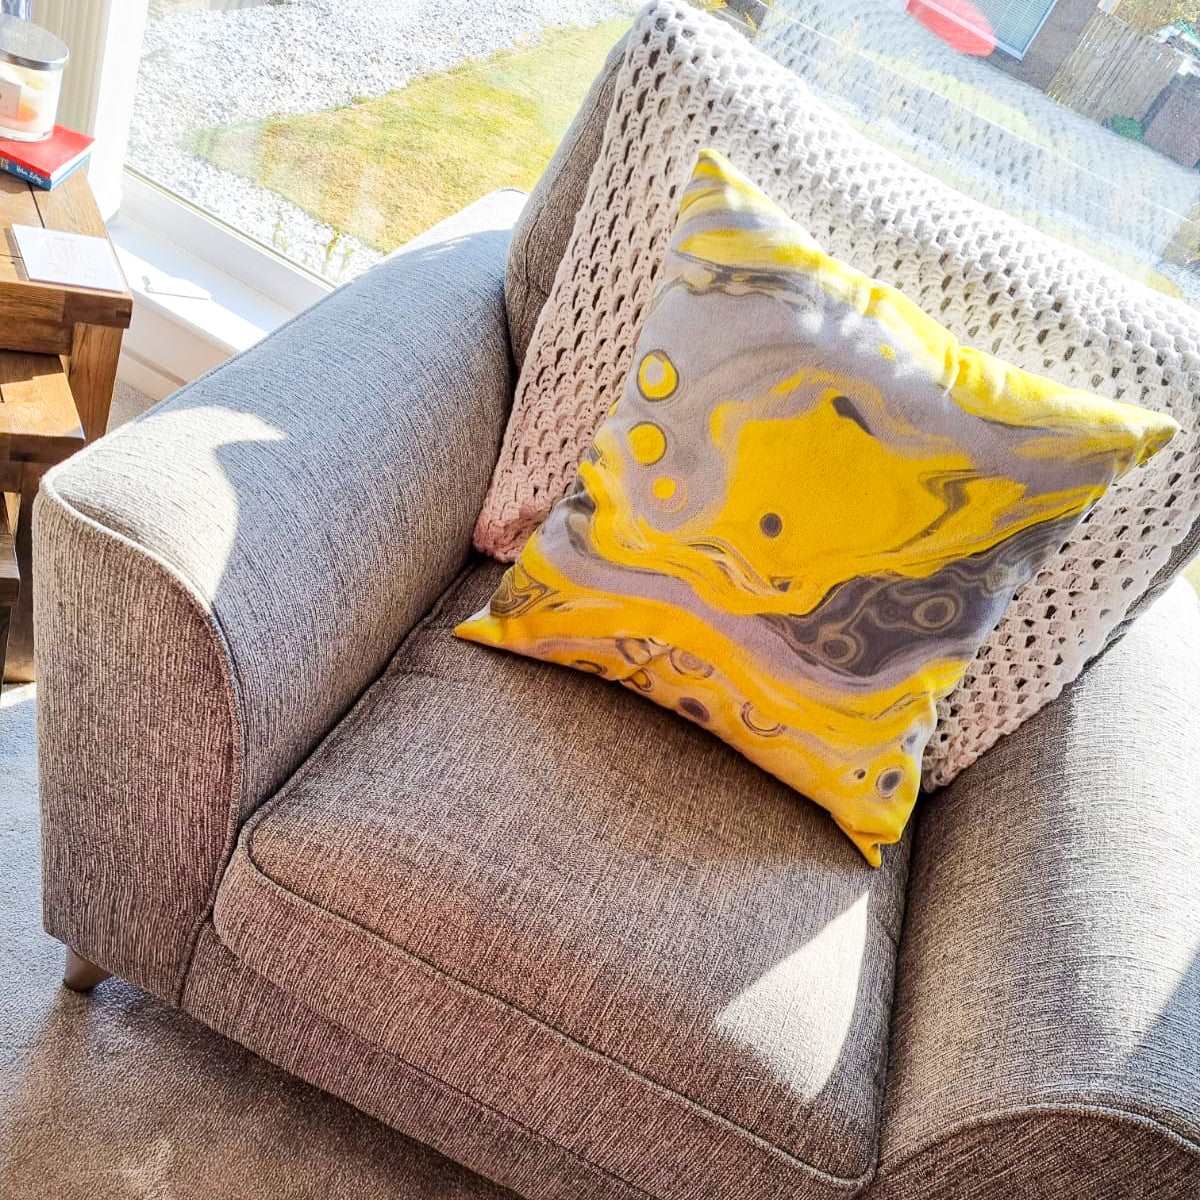 'Zest' Yellow & Grey Cushion